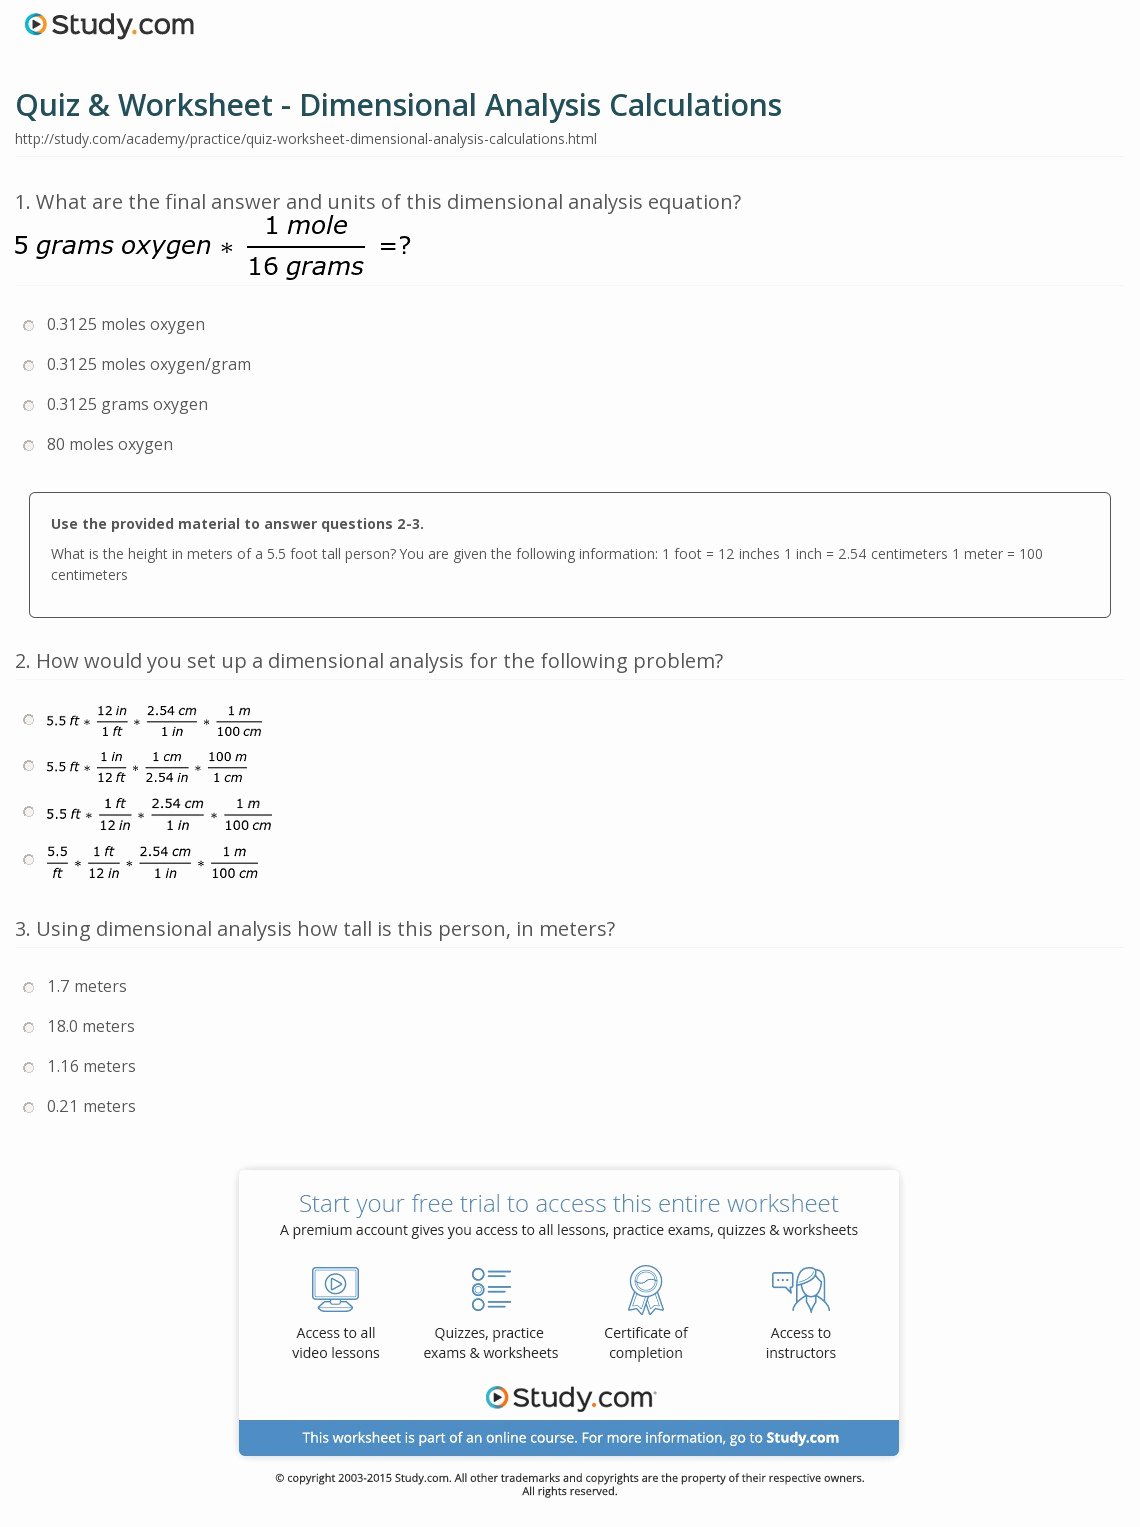 Dimensional Analysis Worksheet Answers Inspirational Quiz &amp; Worksheet Dimensional Analysis Calculations